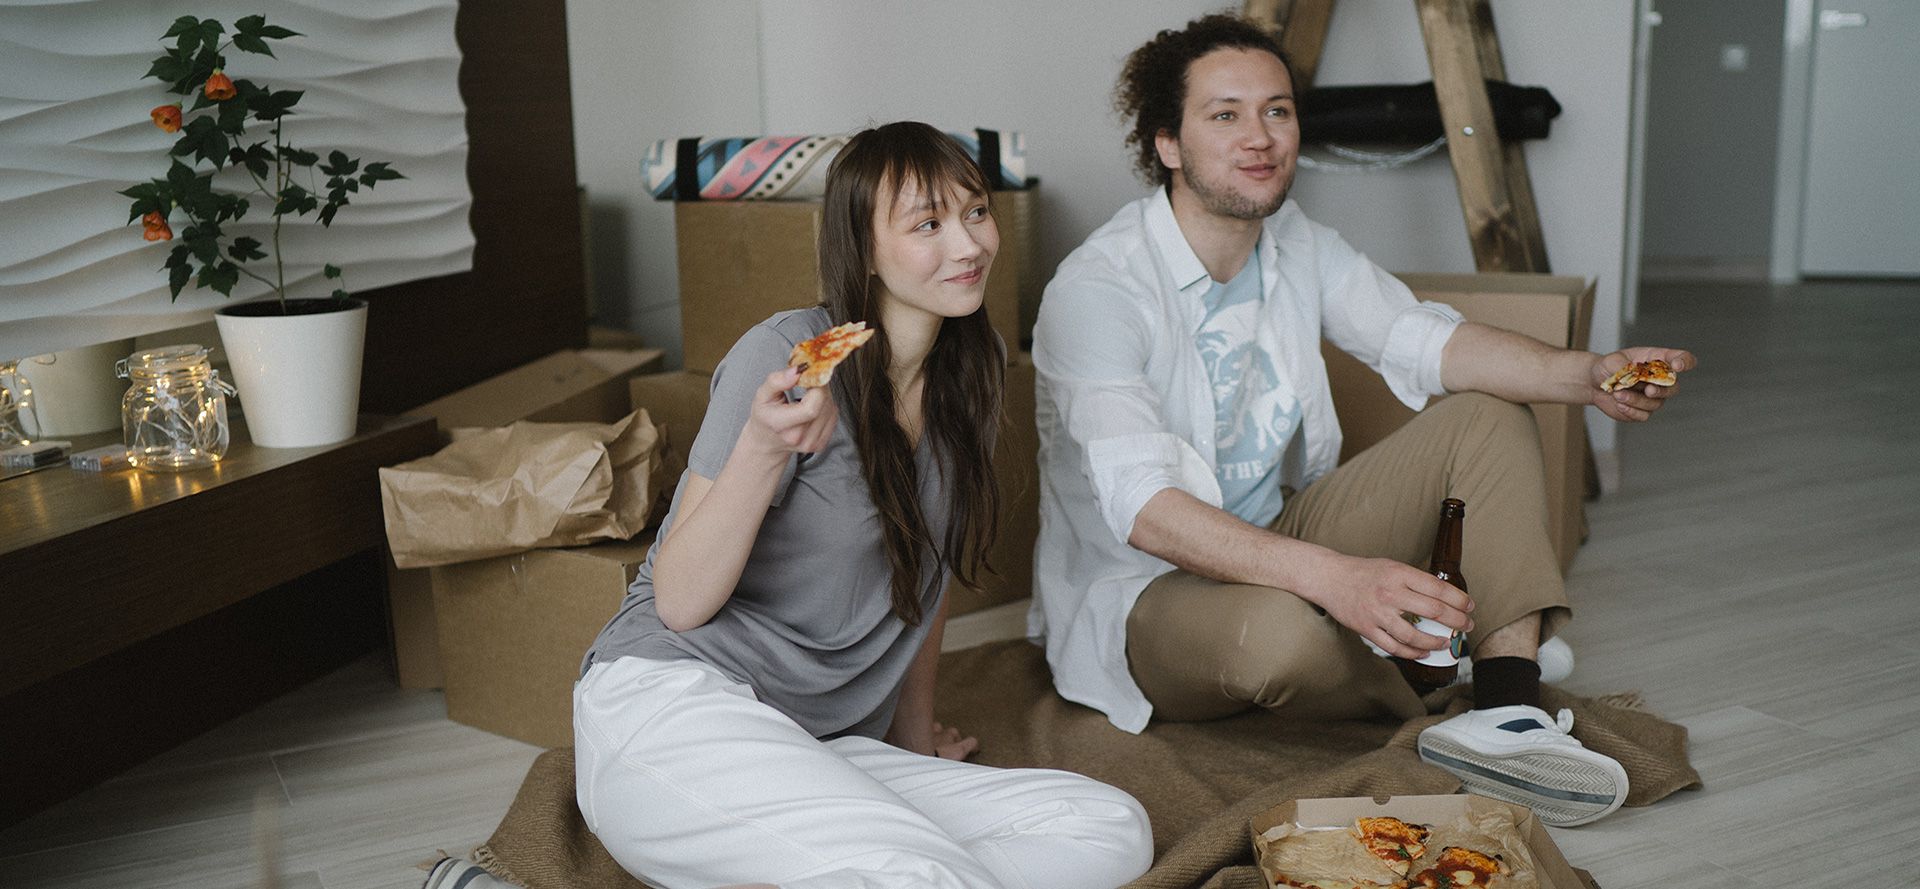 Par som äter pizza på en dejt.